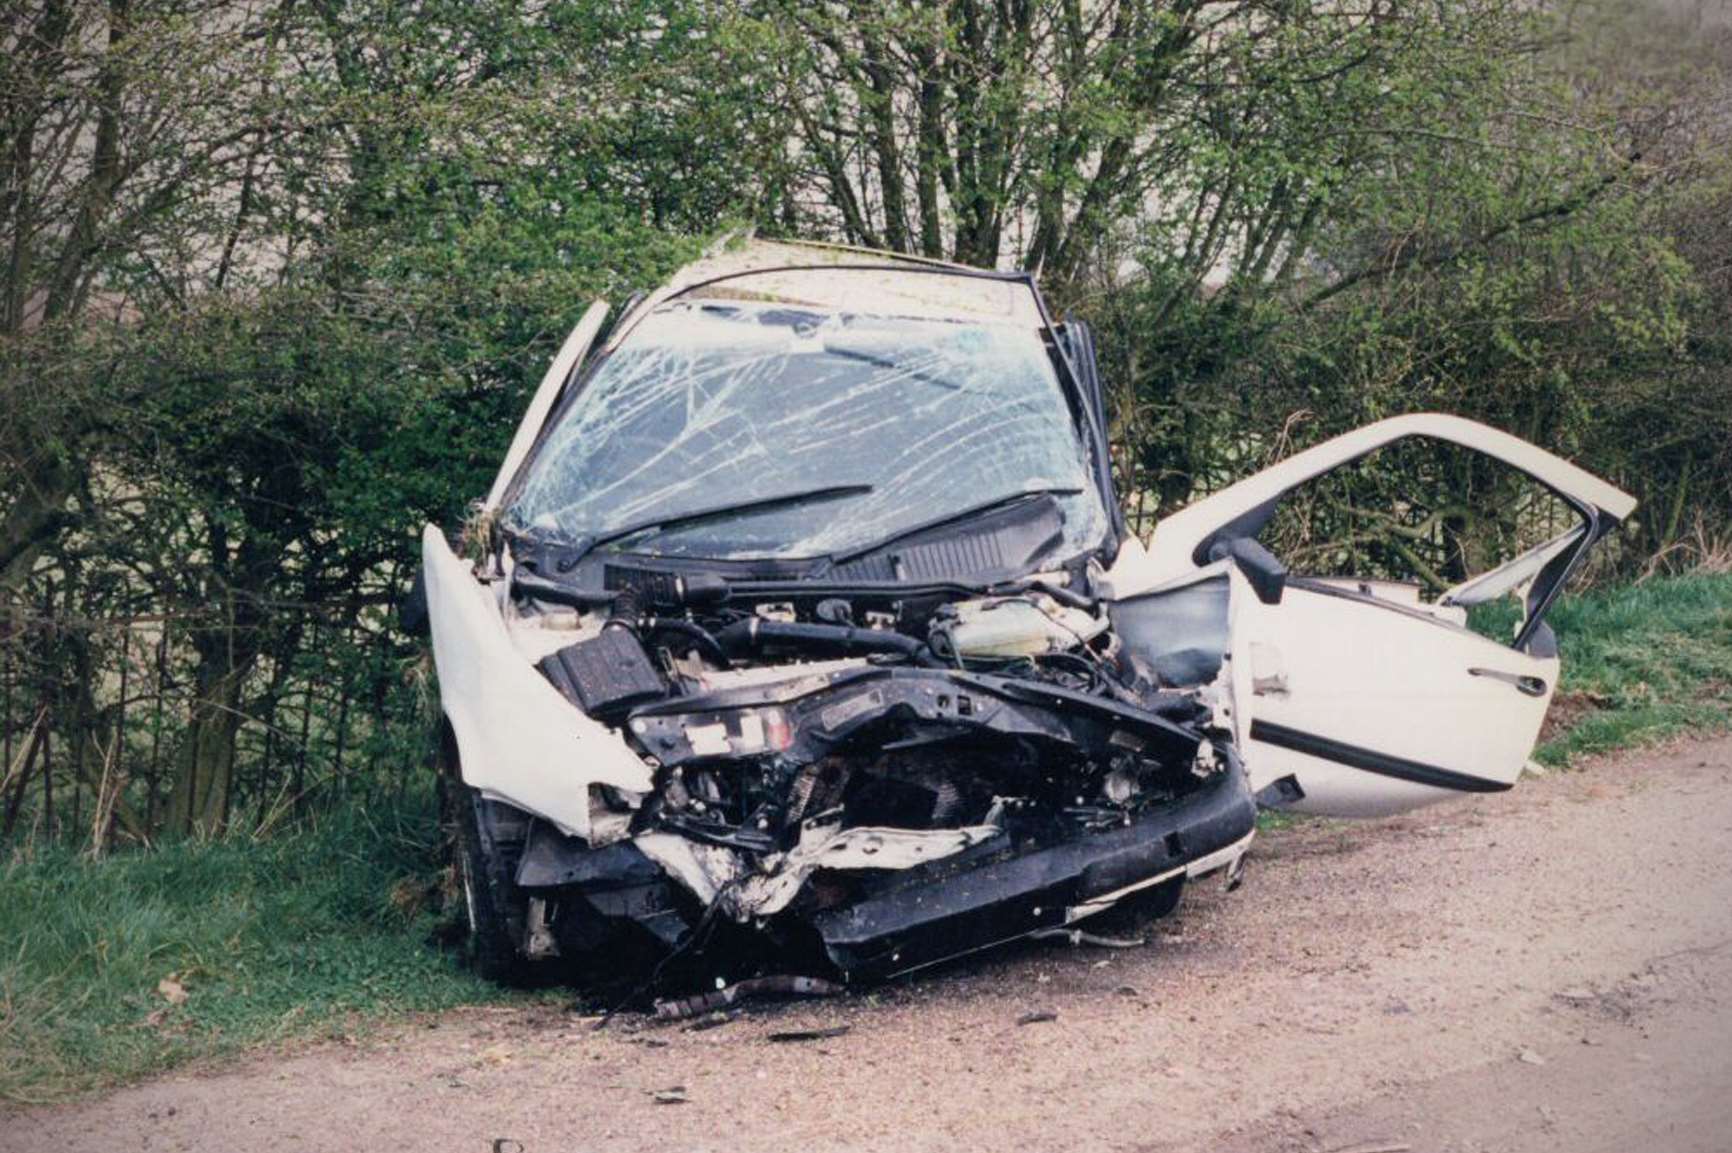 A typical roadside car incident